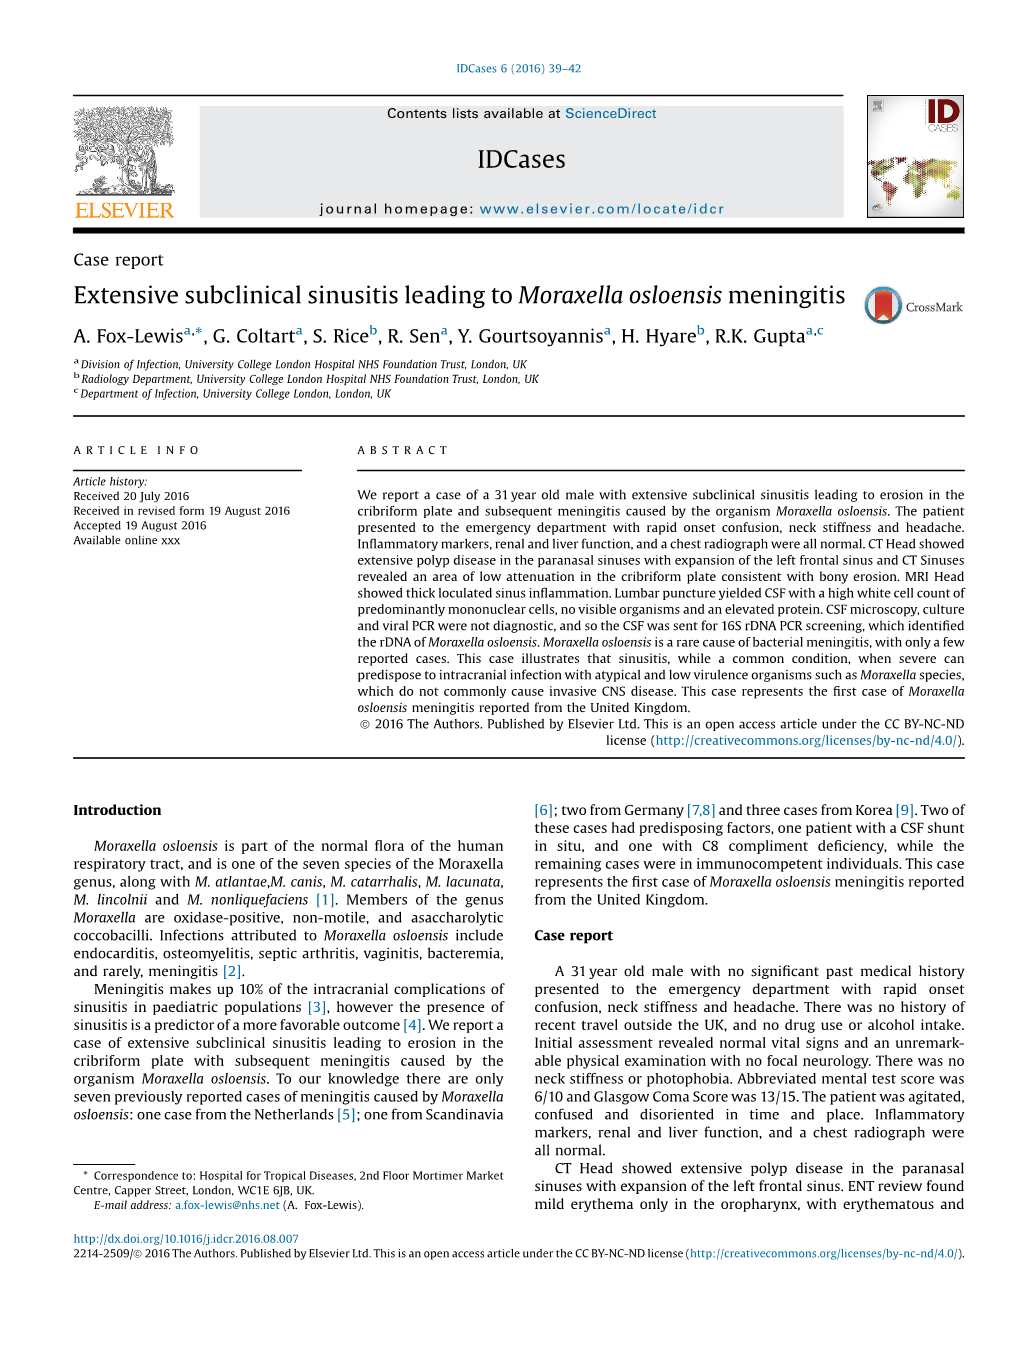 Extensive Subclinical Sinusitis Leading to Moraxella Osloensis Meningitis